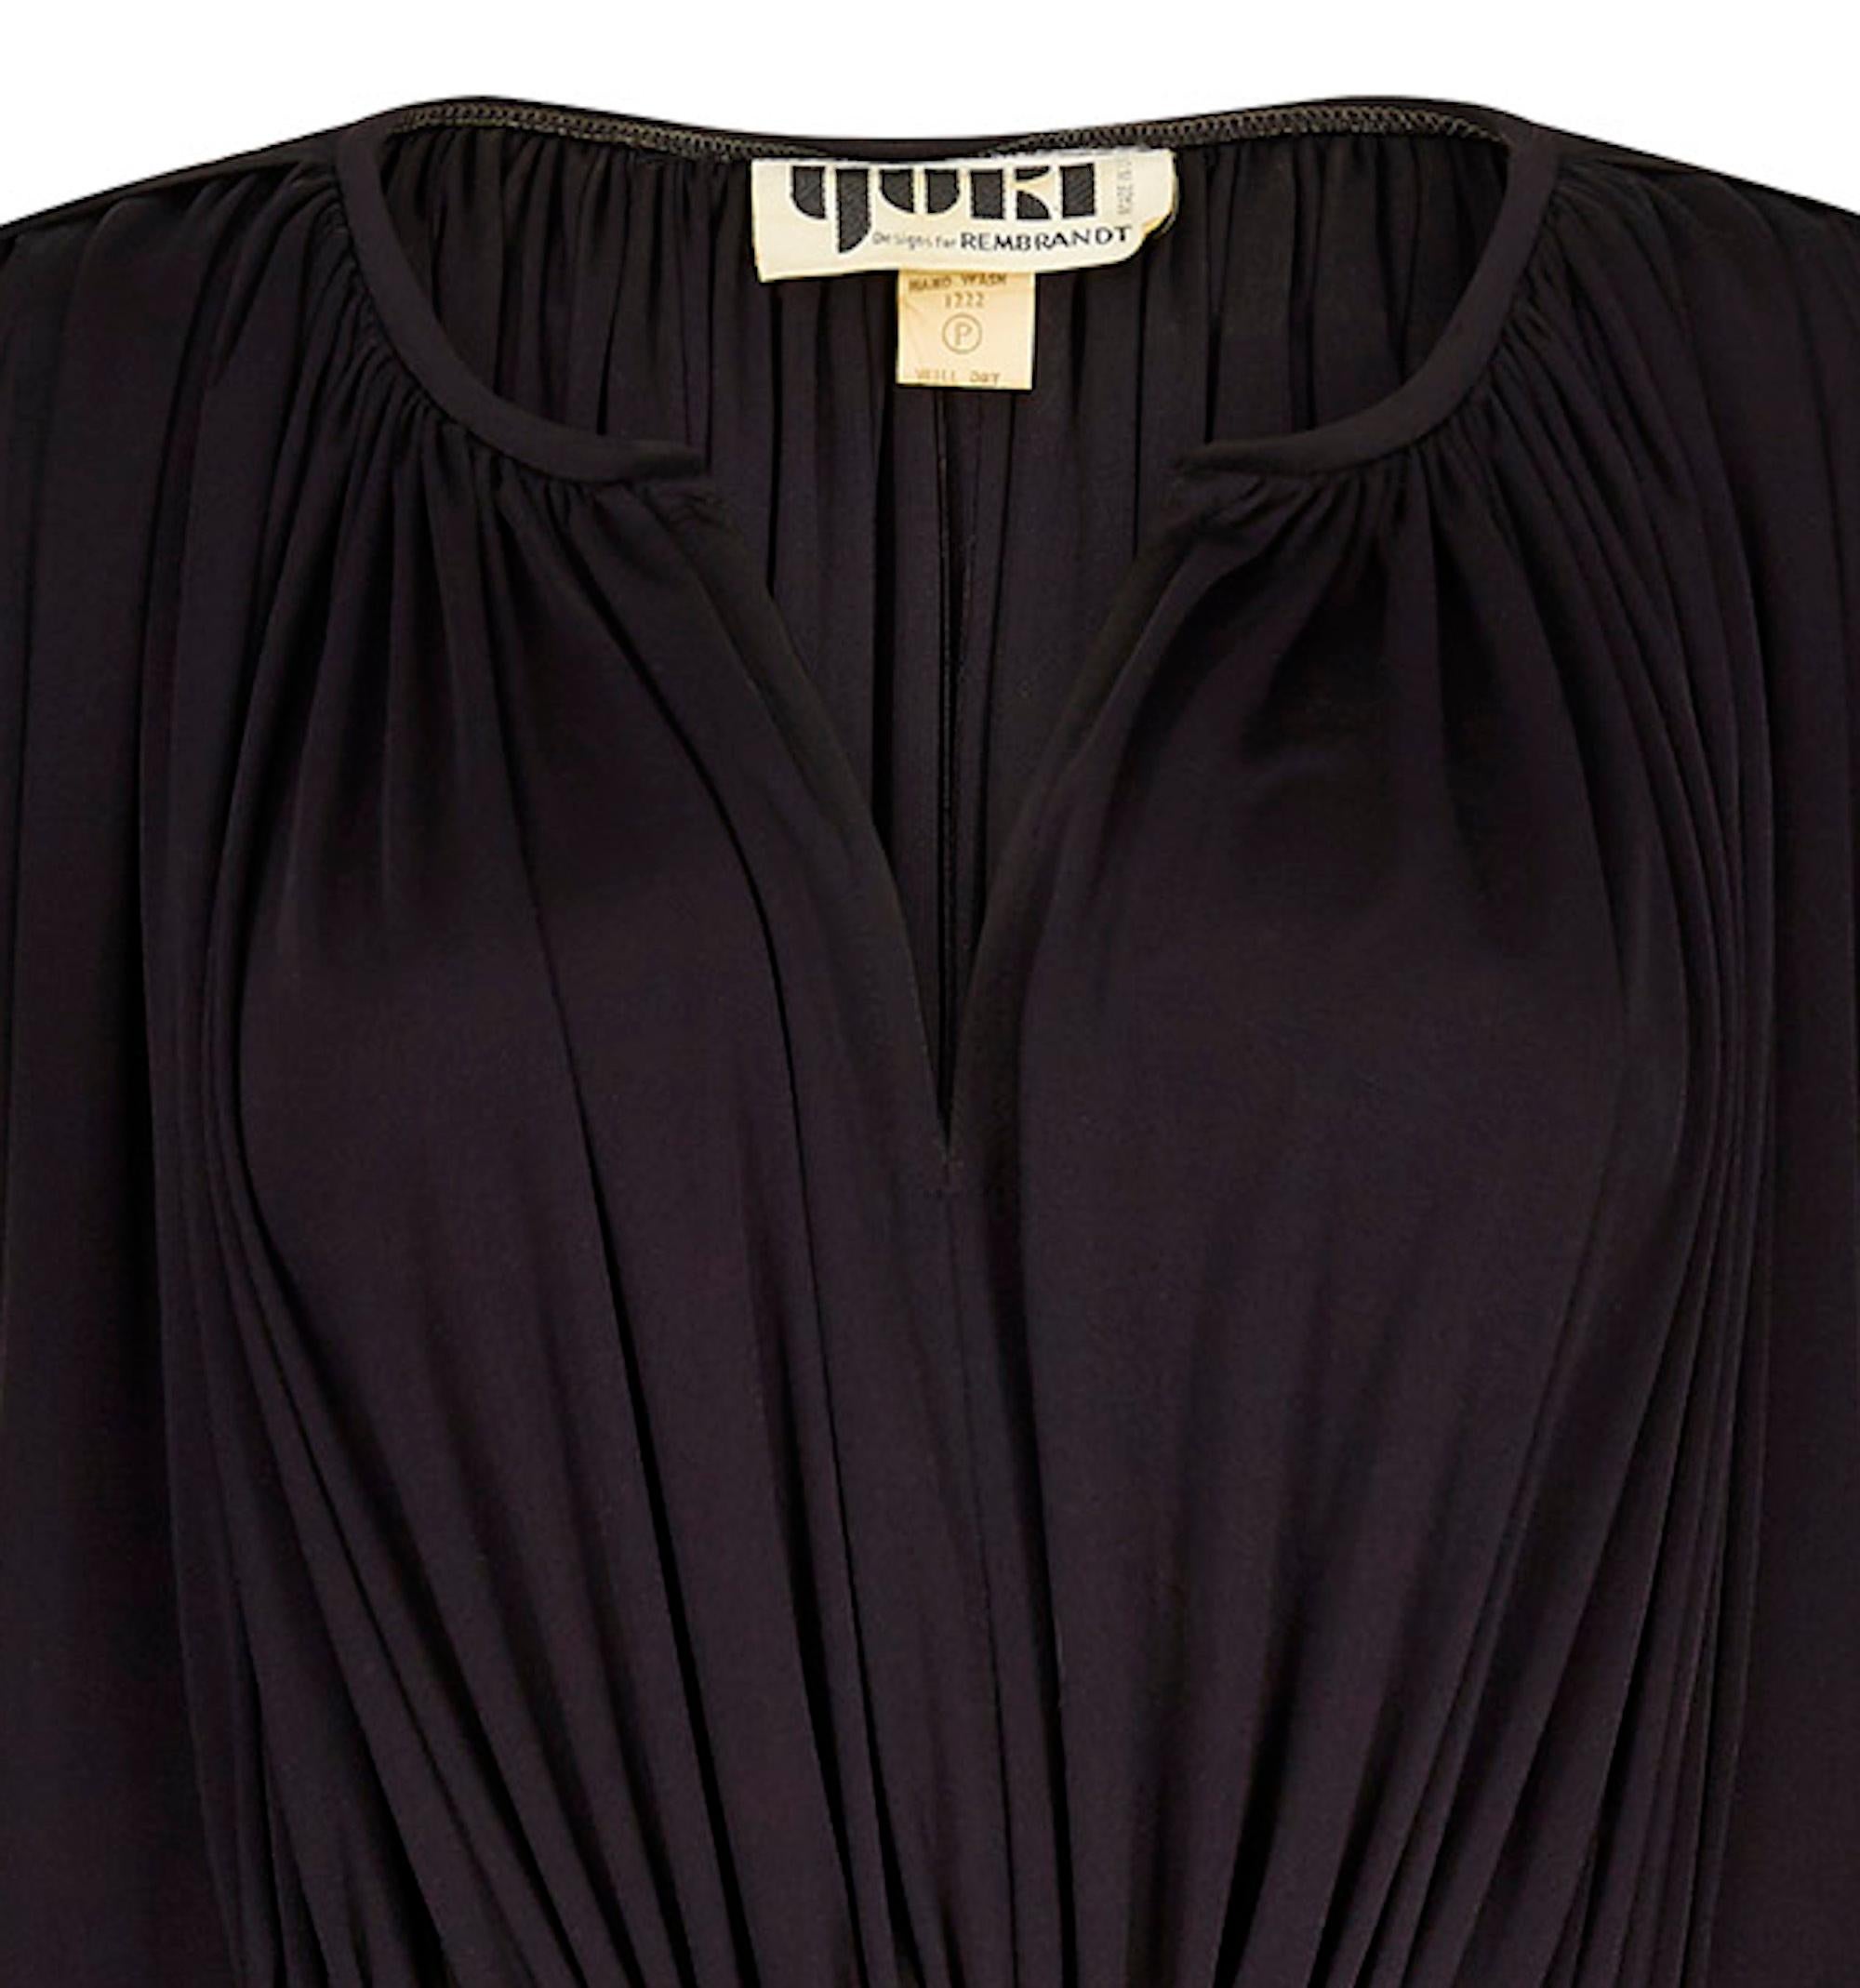 Women's 1970s Yuki For Rembrandt Draped Black Jersey Dress With Gathered Waistline